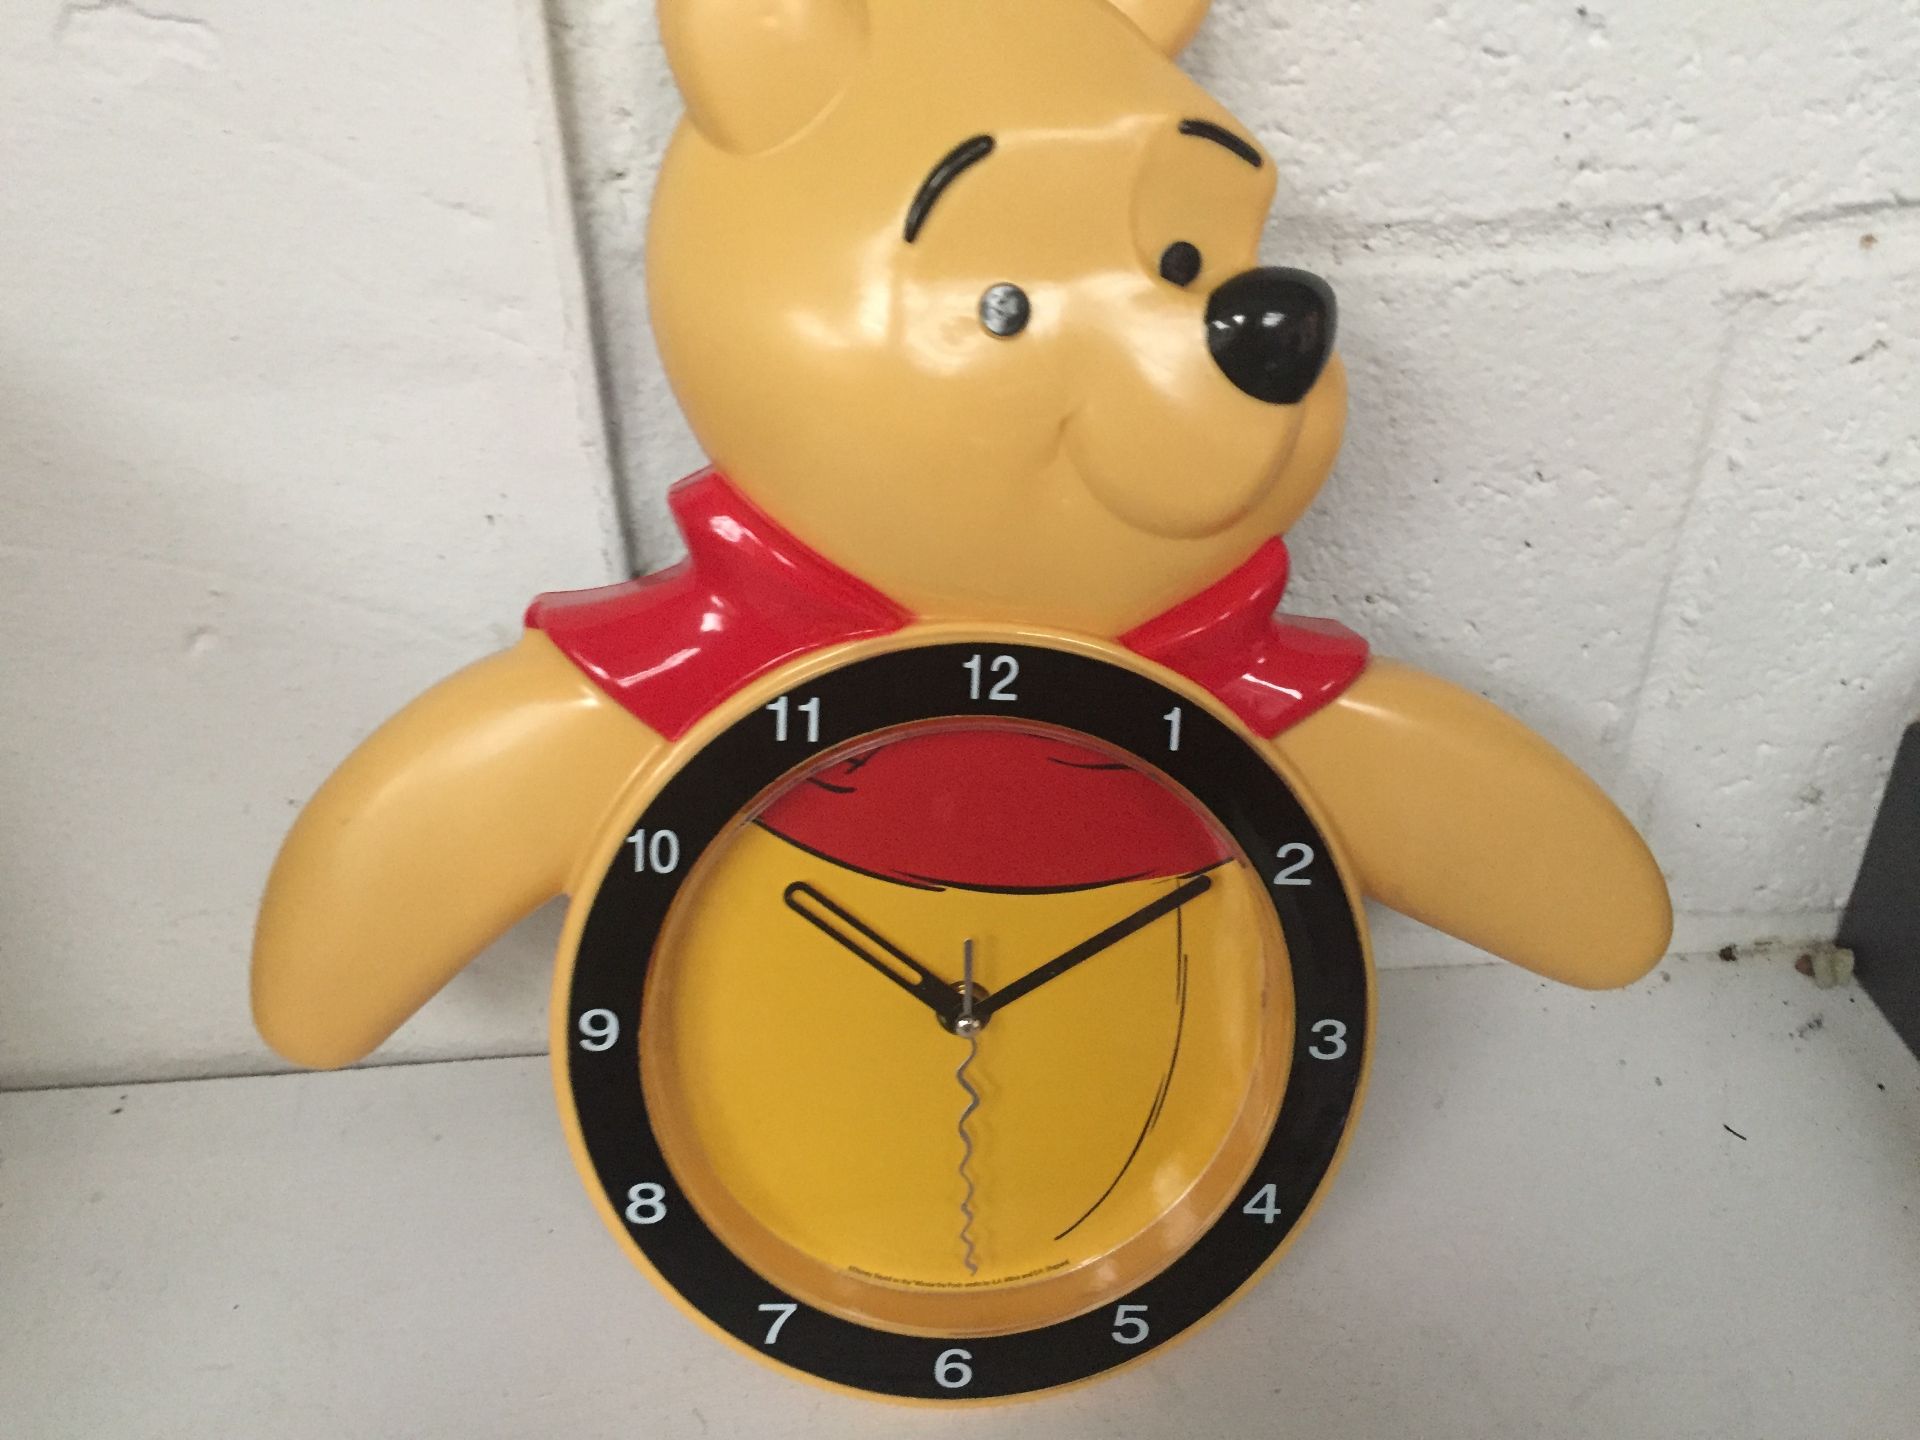 Winnie The Pooh Clock as New